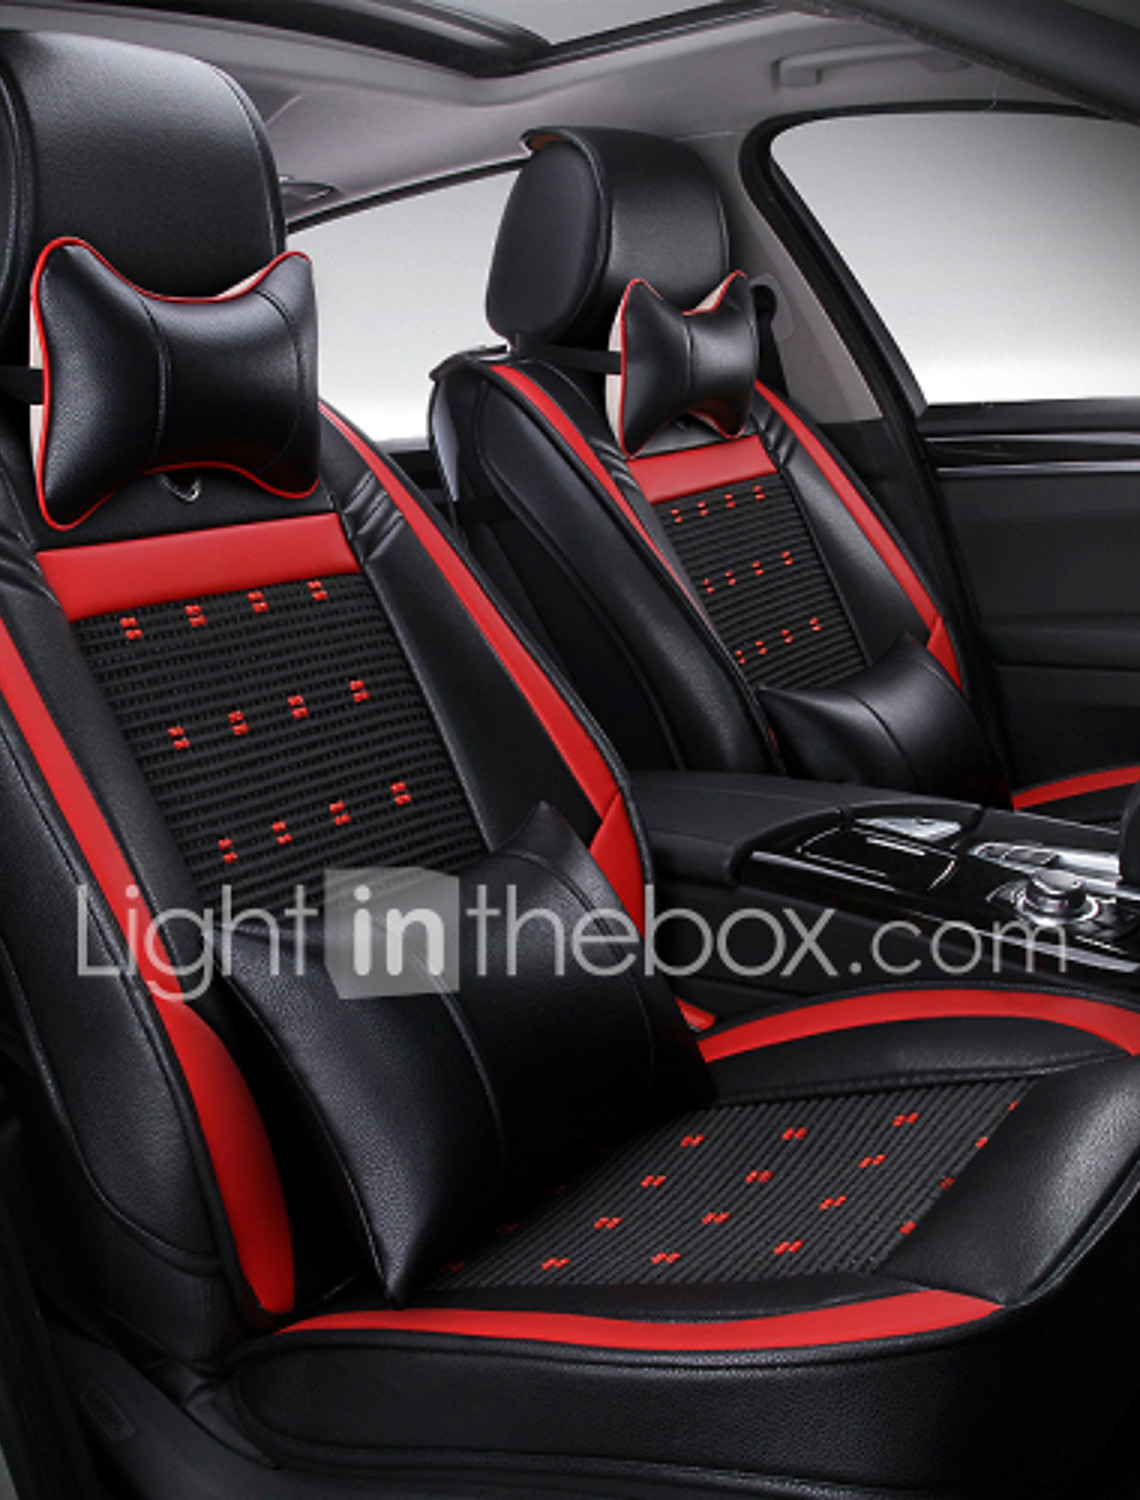 BEIGE Auto Sitzbezüge PU Leder Sitzkissen Atmungsaktiv für VW Audi Mercedes LKW